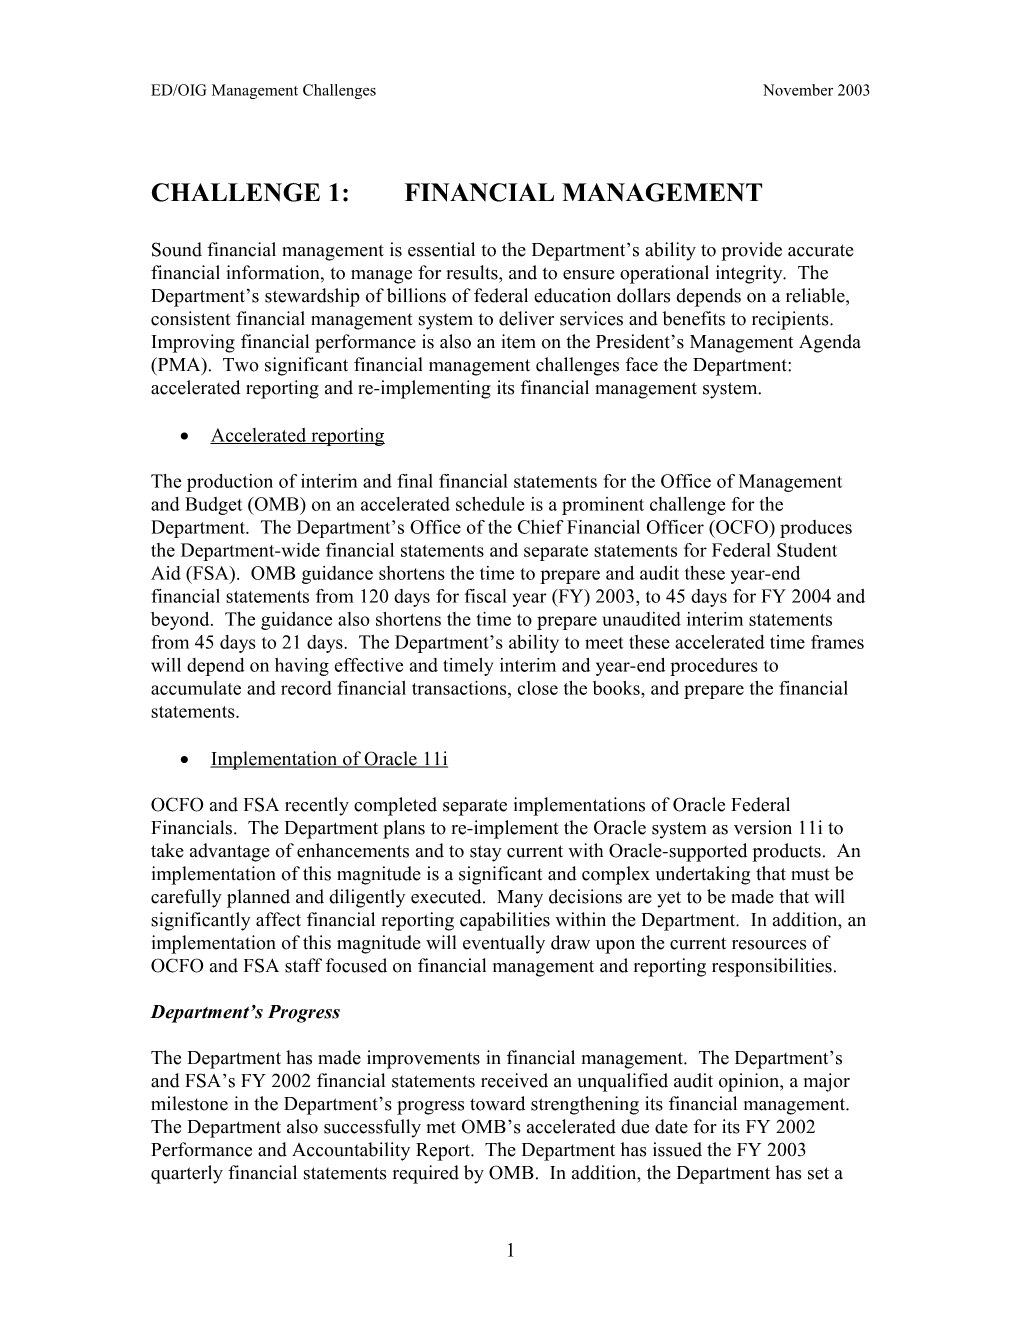 CHALLENGE 1: Financial Management (Msword)